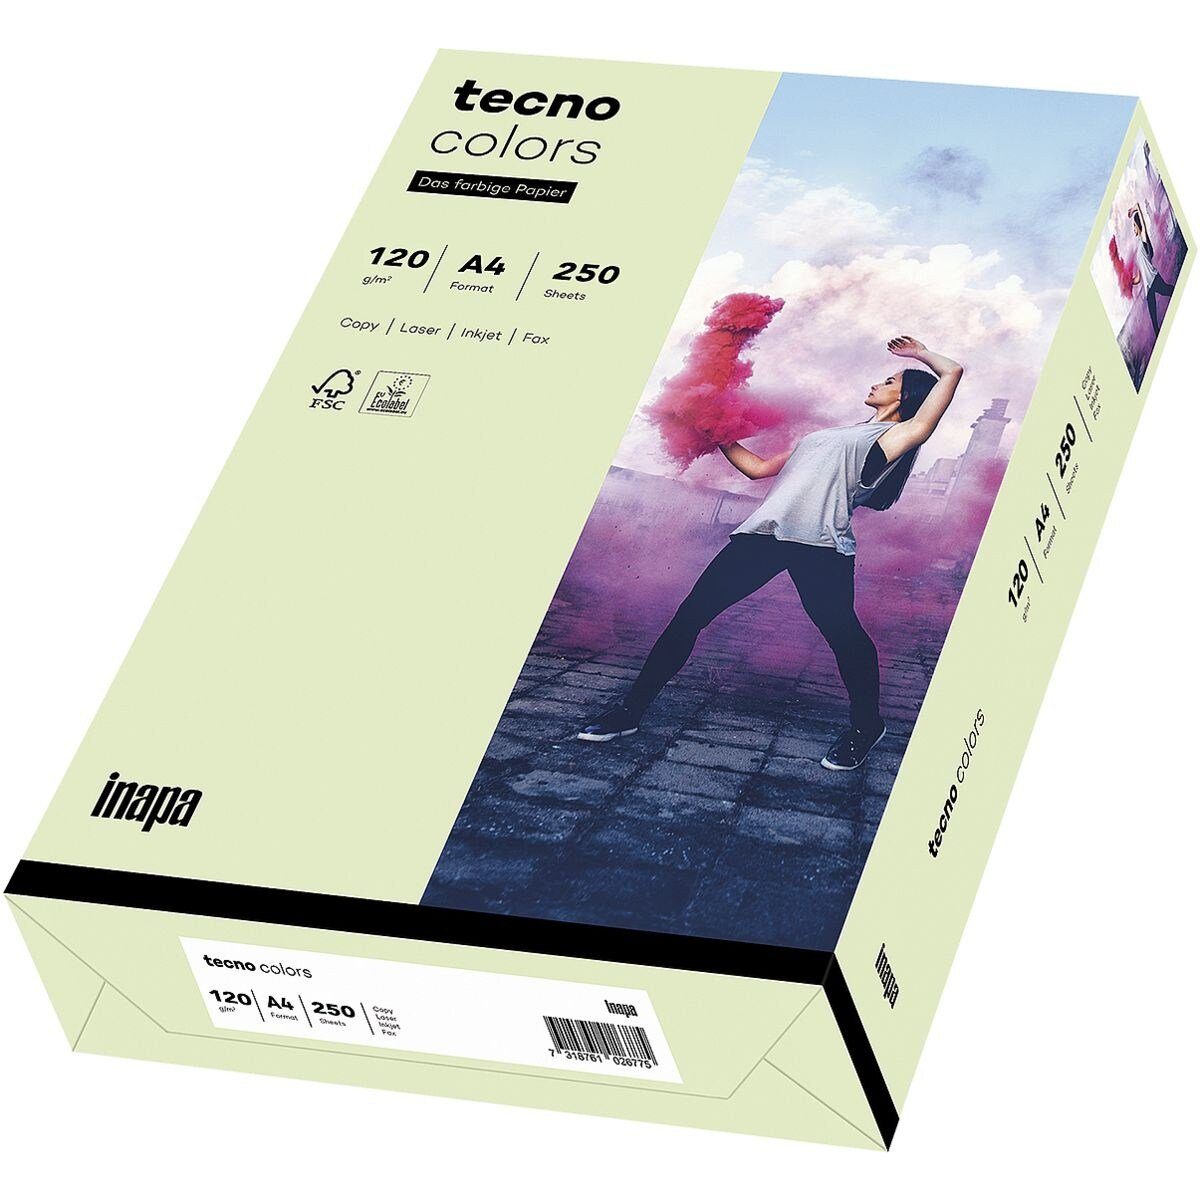 Inapa tecno Drucker- und Kopierpapier Rainbow / tecno Colors, Pastellfarben, Format DIN A4, 120 g/m², 250 Blatt hellgrün